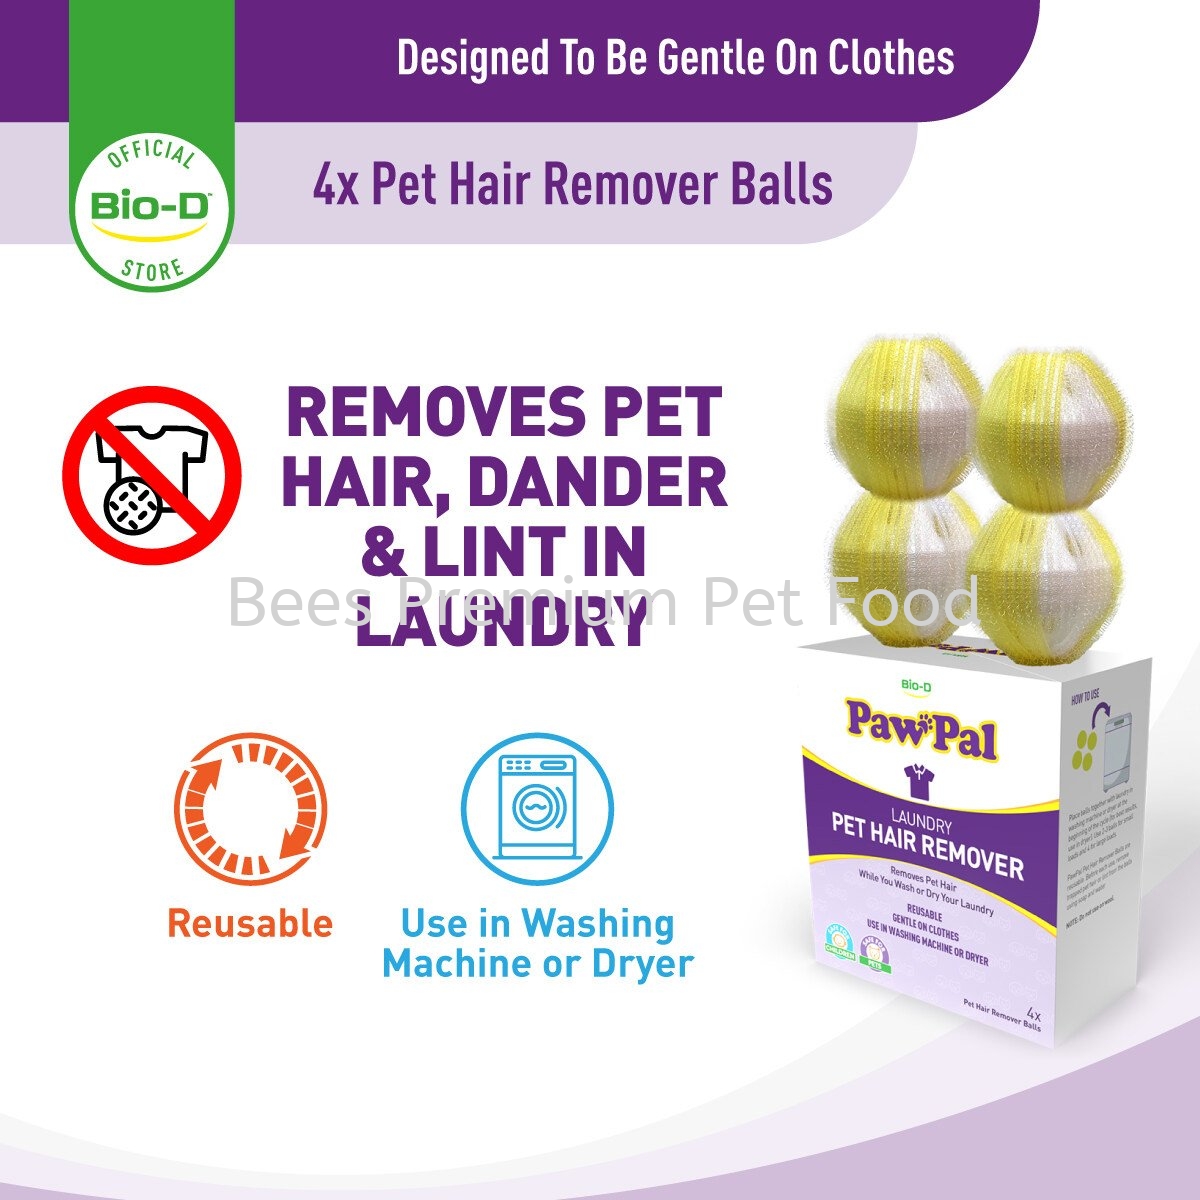 Bio-D PawPal Laundry Pet Hair Remover (4x Pet Hair Remover Balls)  Accessories Selangor, Malaysia, Kuala